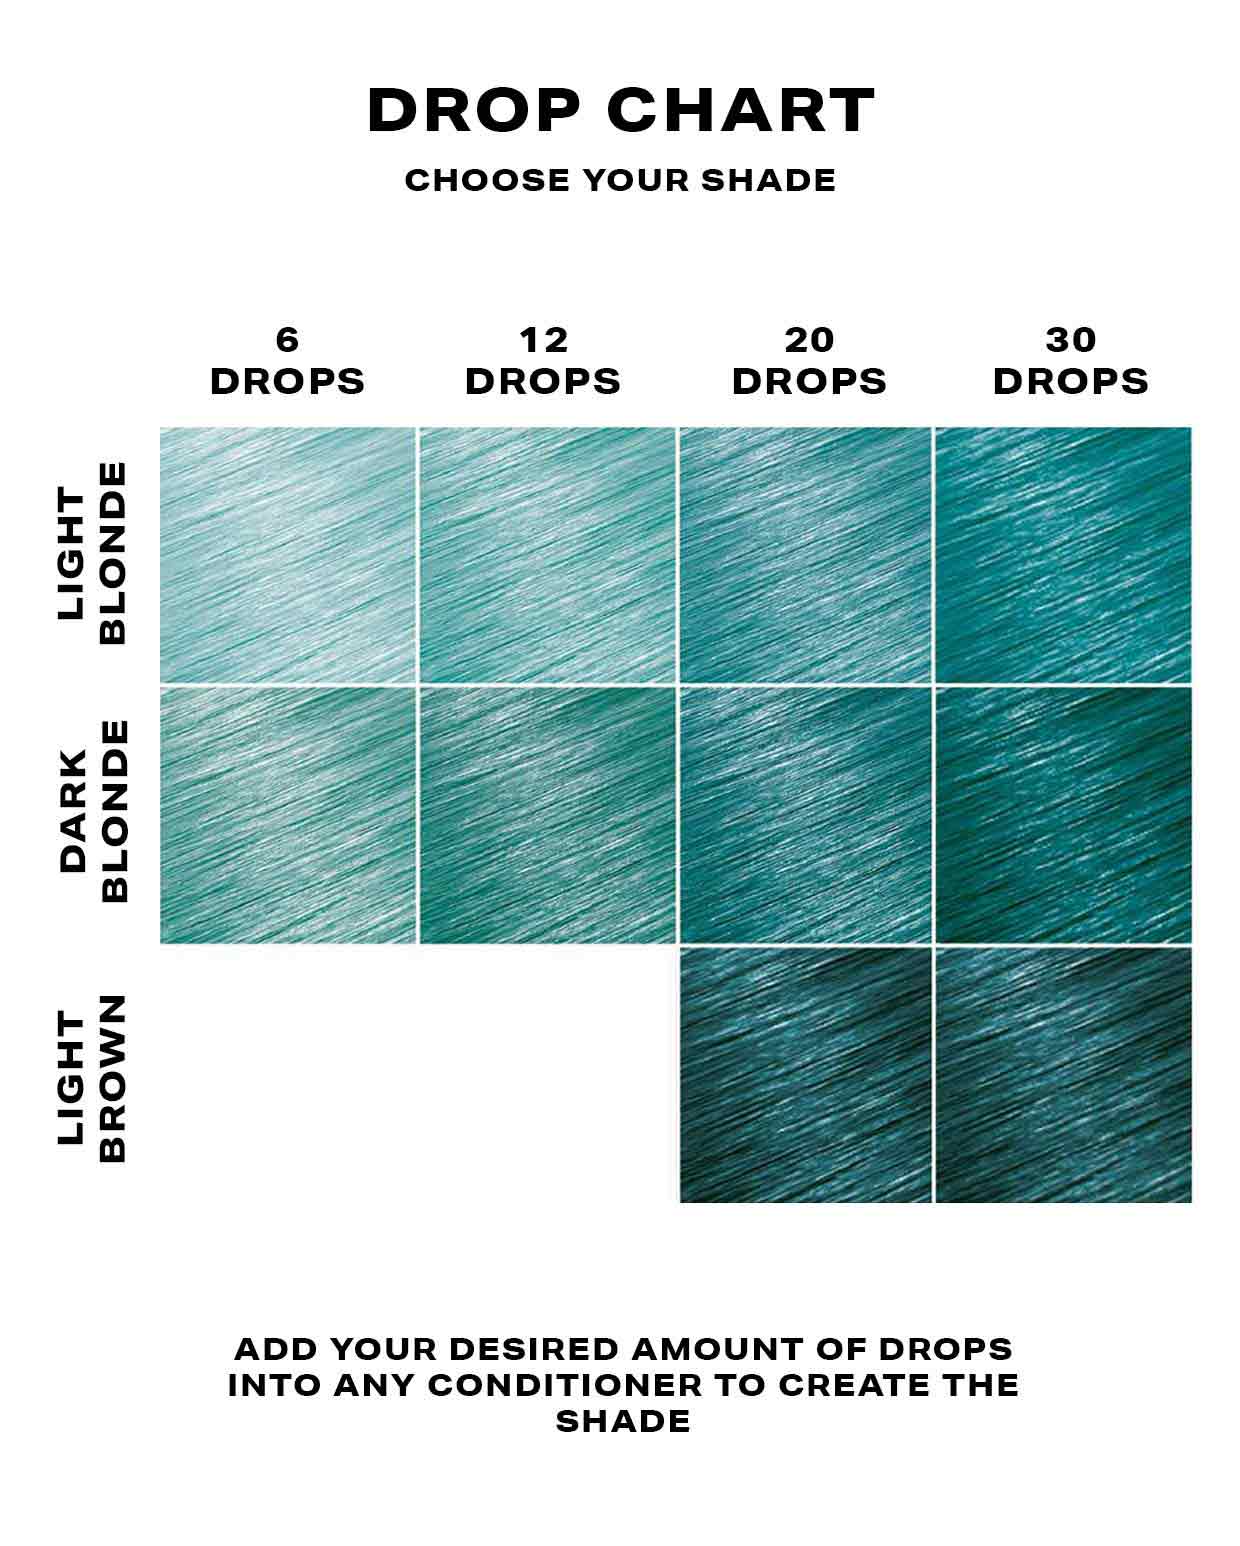 Aqua hair dye DROP IT chart